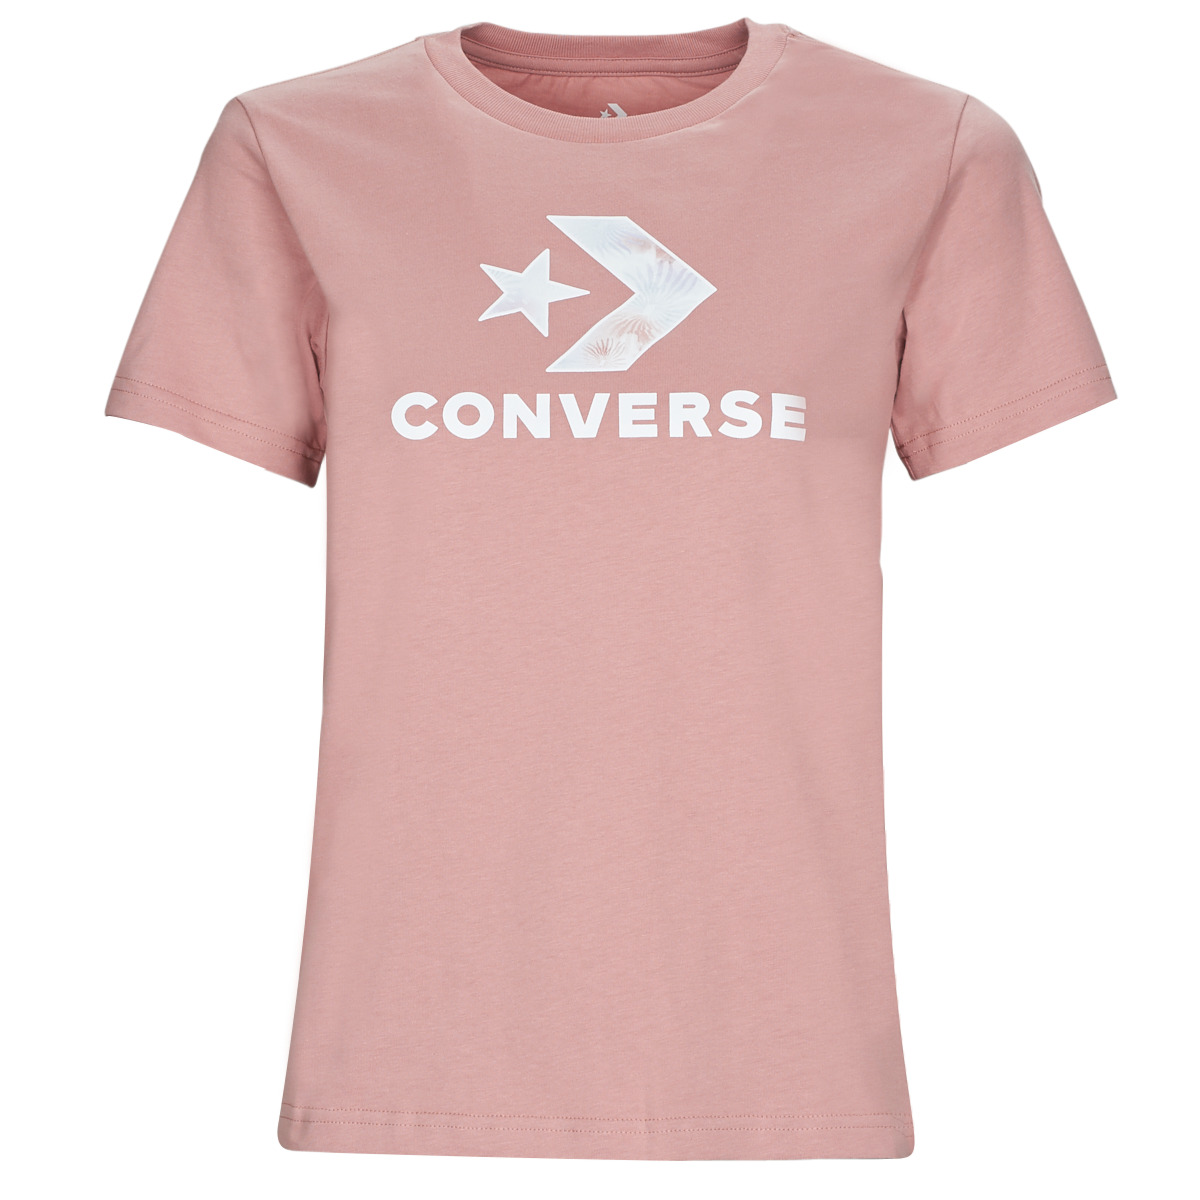 Converse Rose FLORAL STAR CHEVRON pJM2uITC